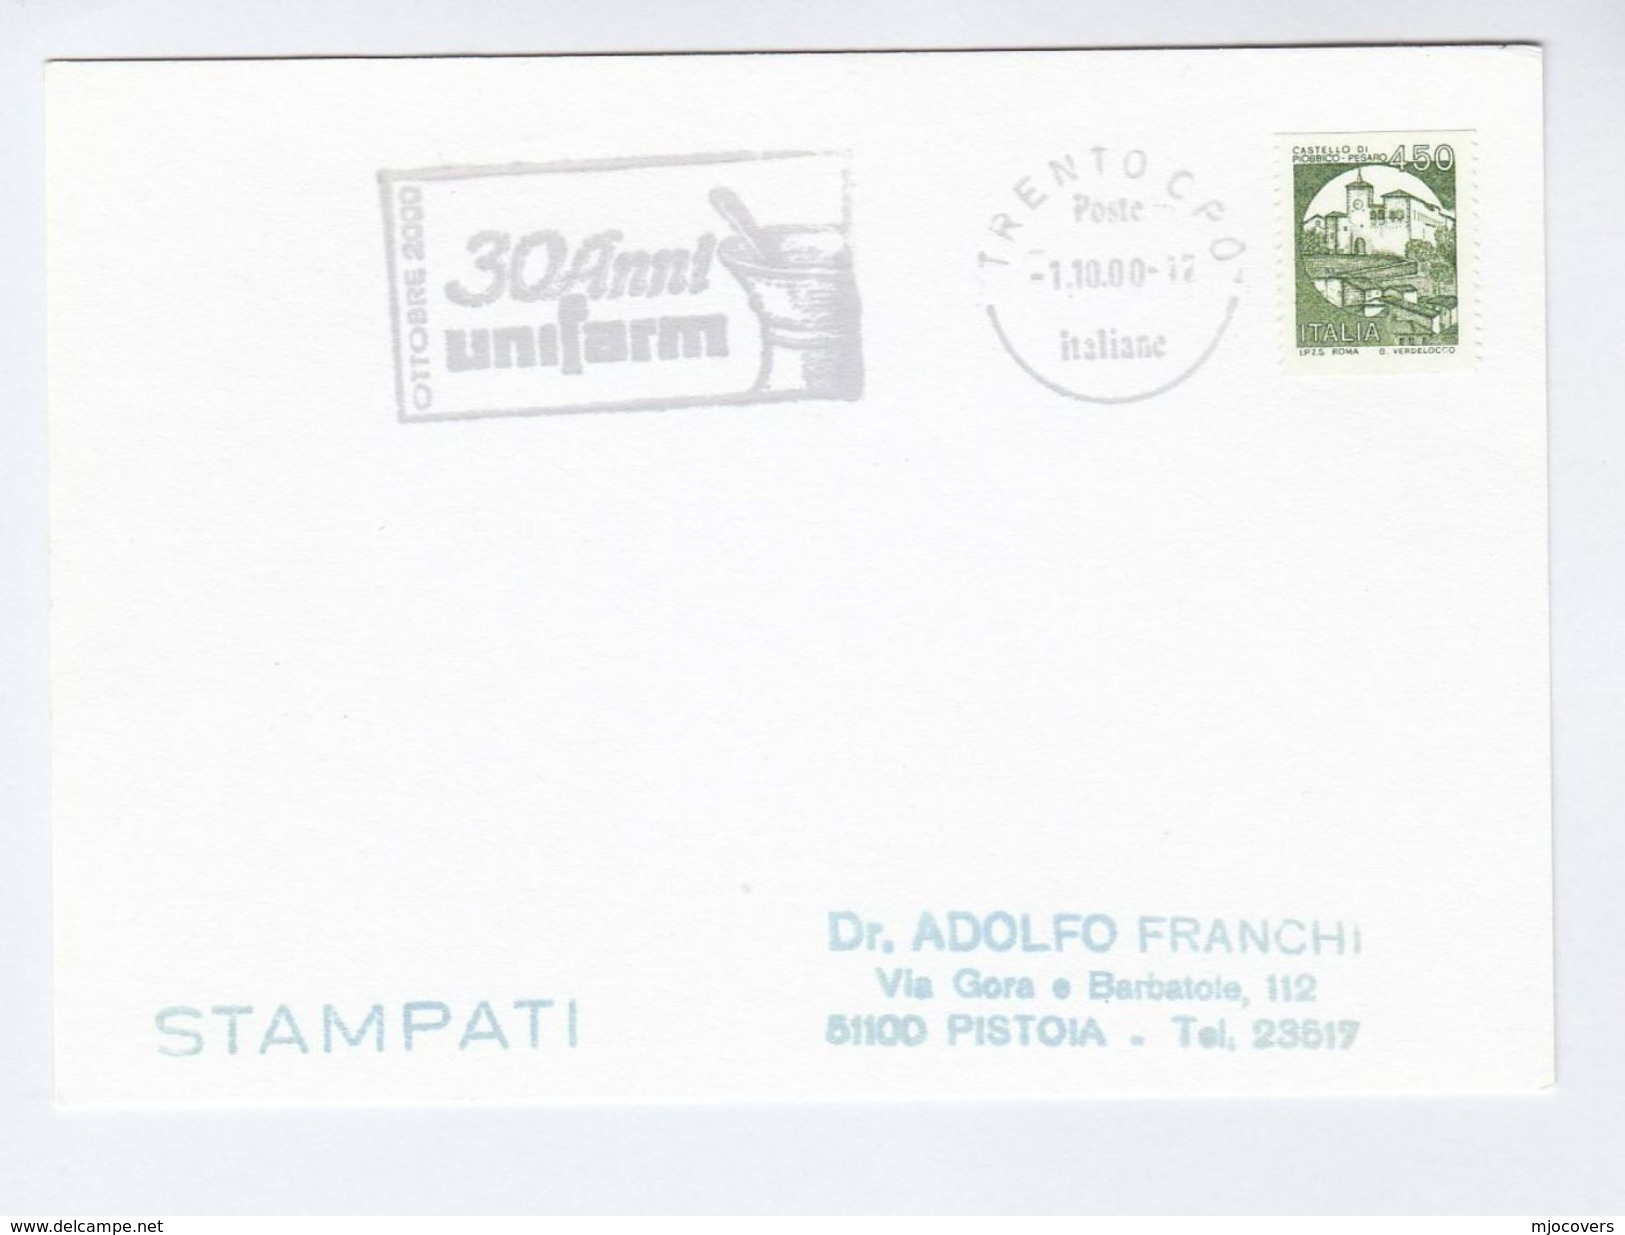 2000 Trento ITALY PHARMACY EVENT COVER  SLOGAN Illus MORTAR PESTLE, UNIFARM 30th ANNIV Medicine Health Stamps - Apotheek